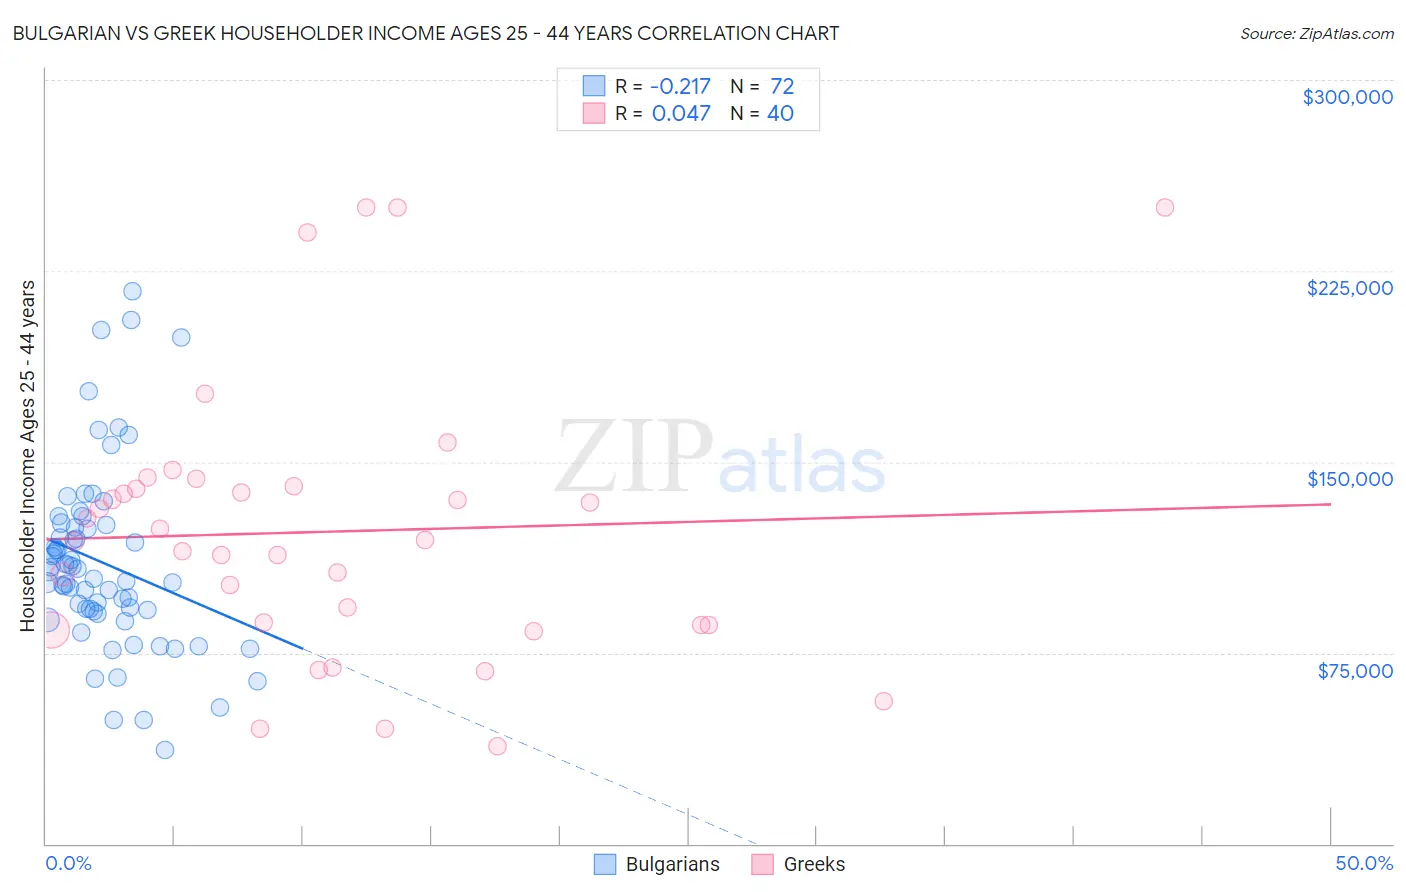 Bulgarian vs Greek Householder Income Ages 25 - 44 years